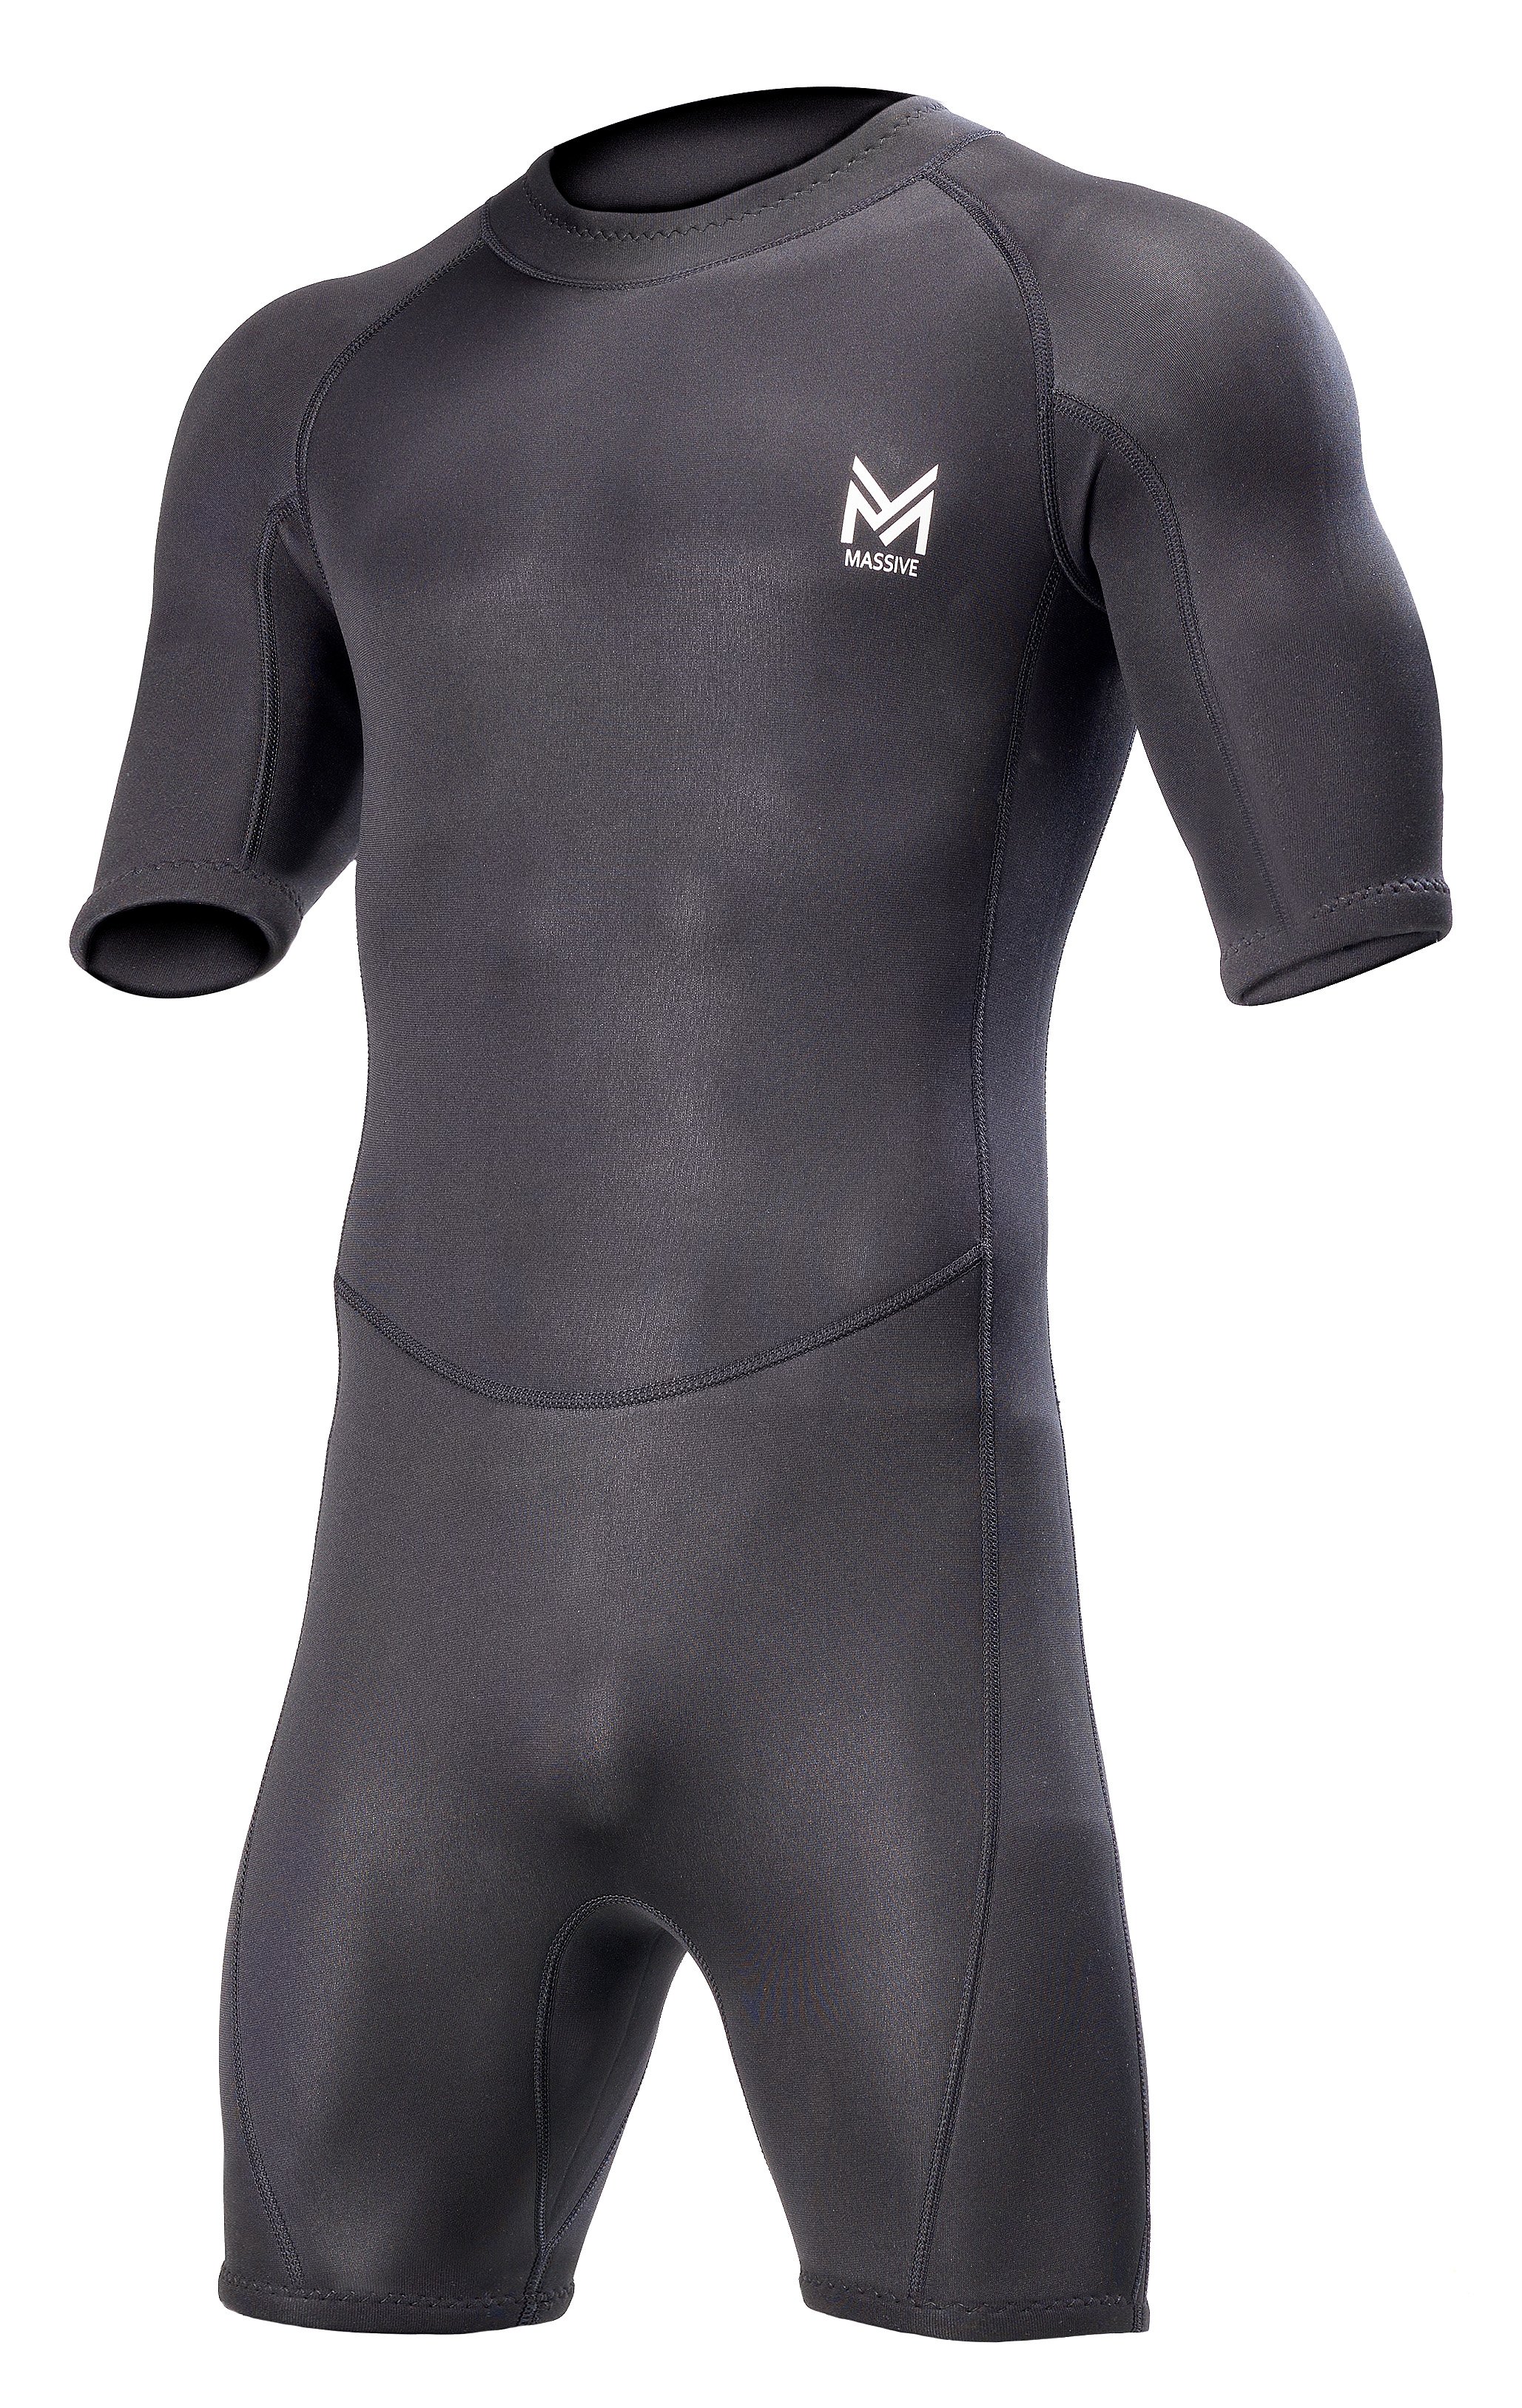 Massive - Men Shorty Wetsuit 3mm - L - Sportog Outdoor